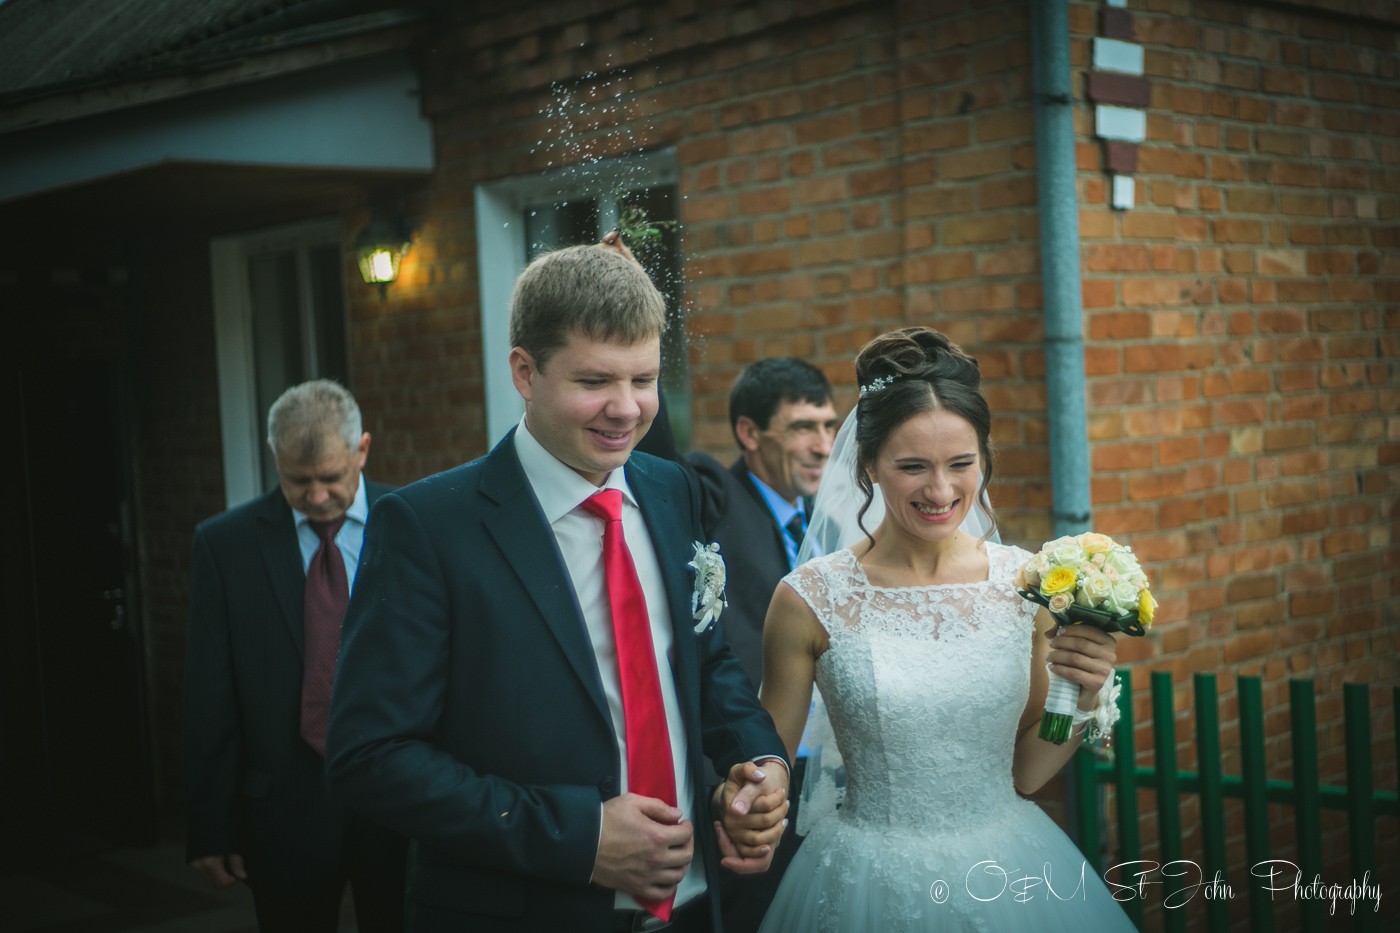 https://drinkteatravel.com/wp-content/uploads/Ukraine-Wedding-9895.jpg